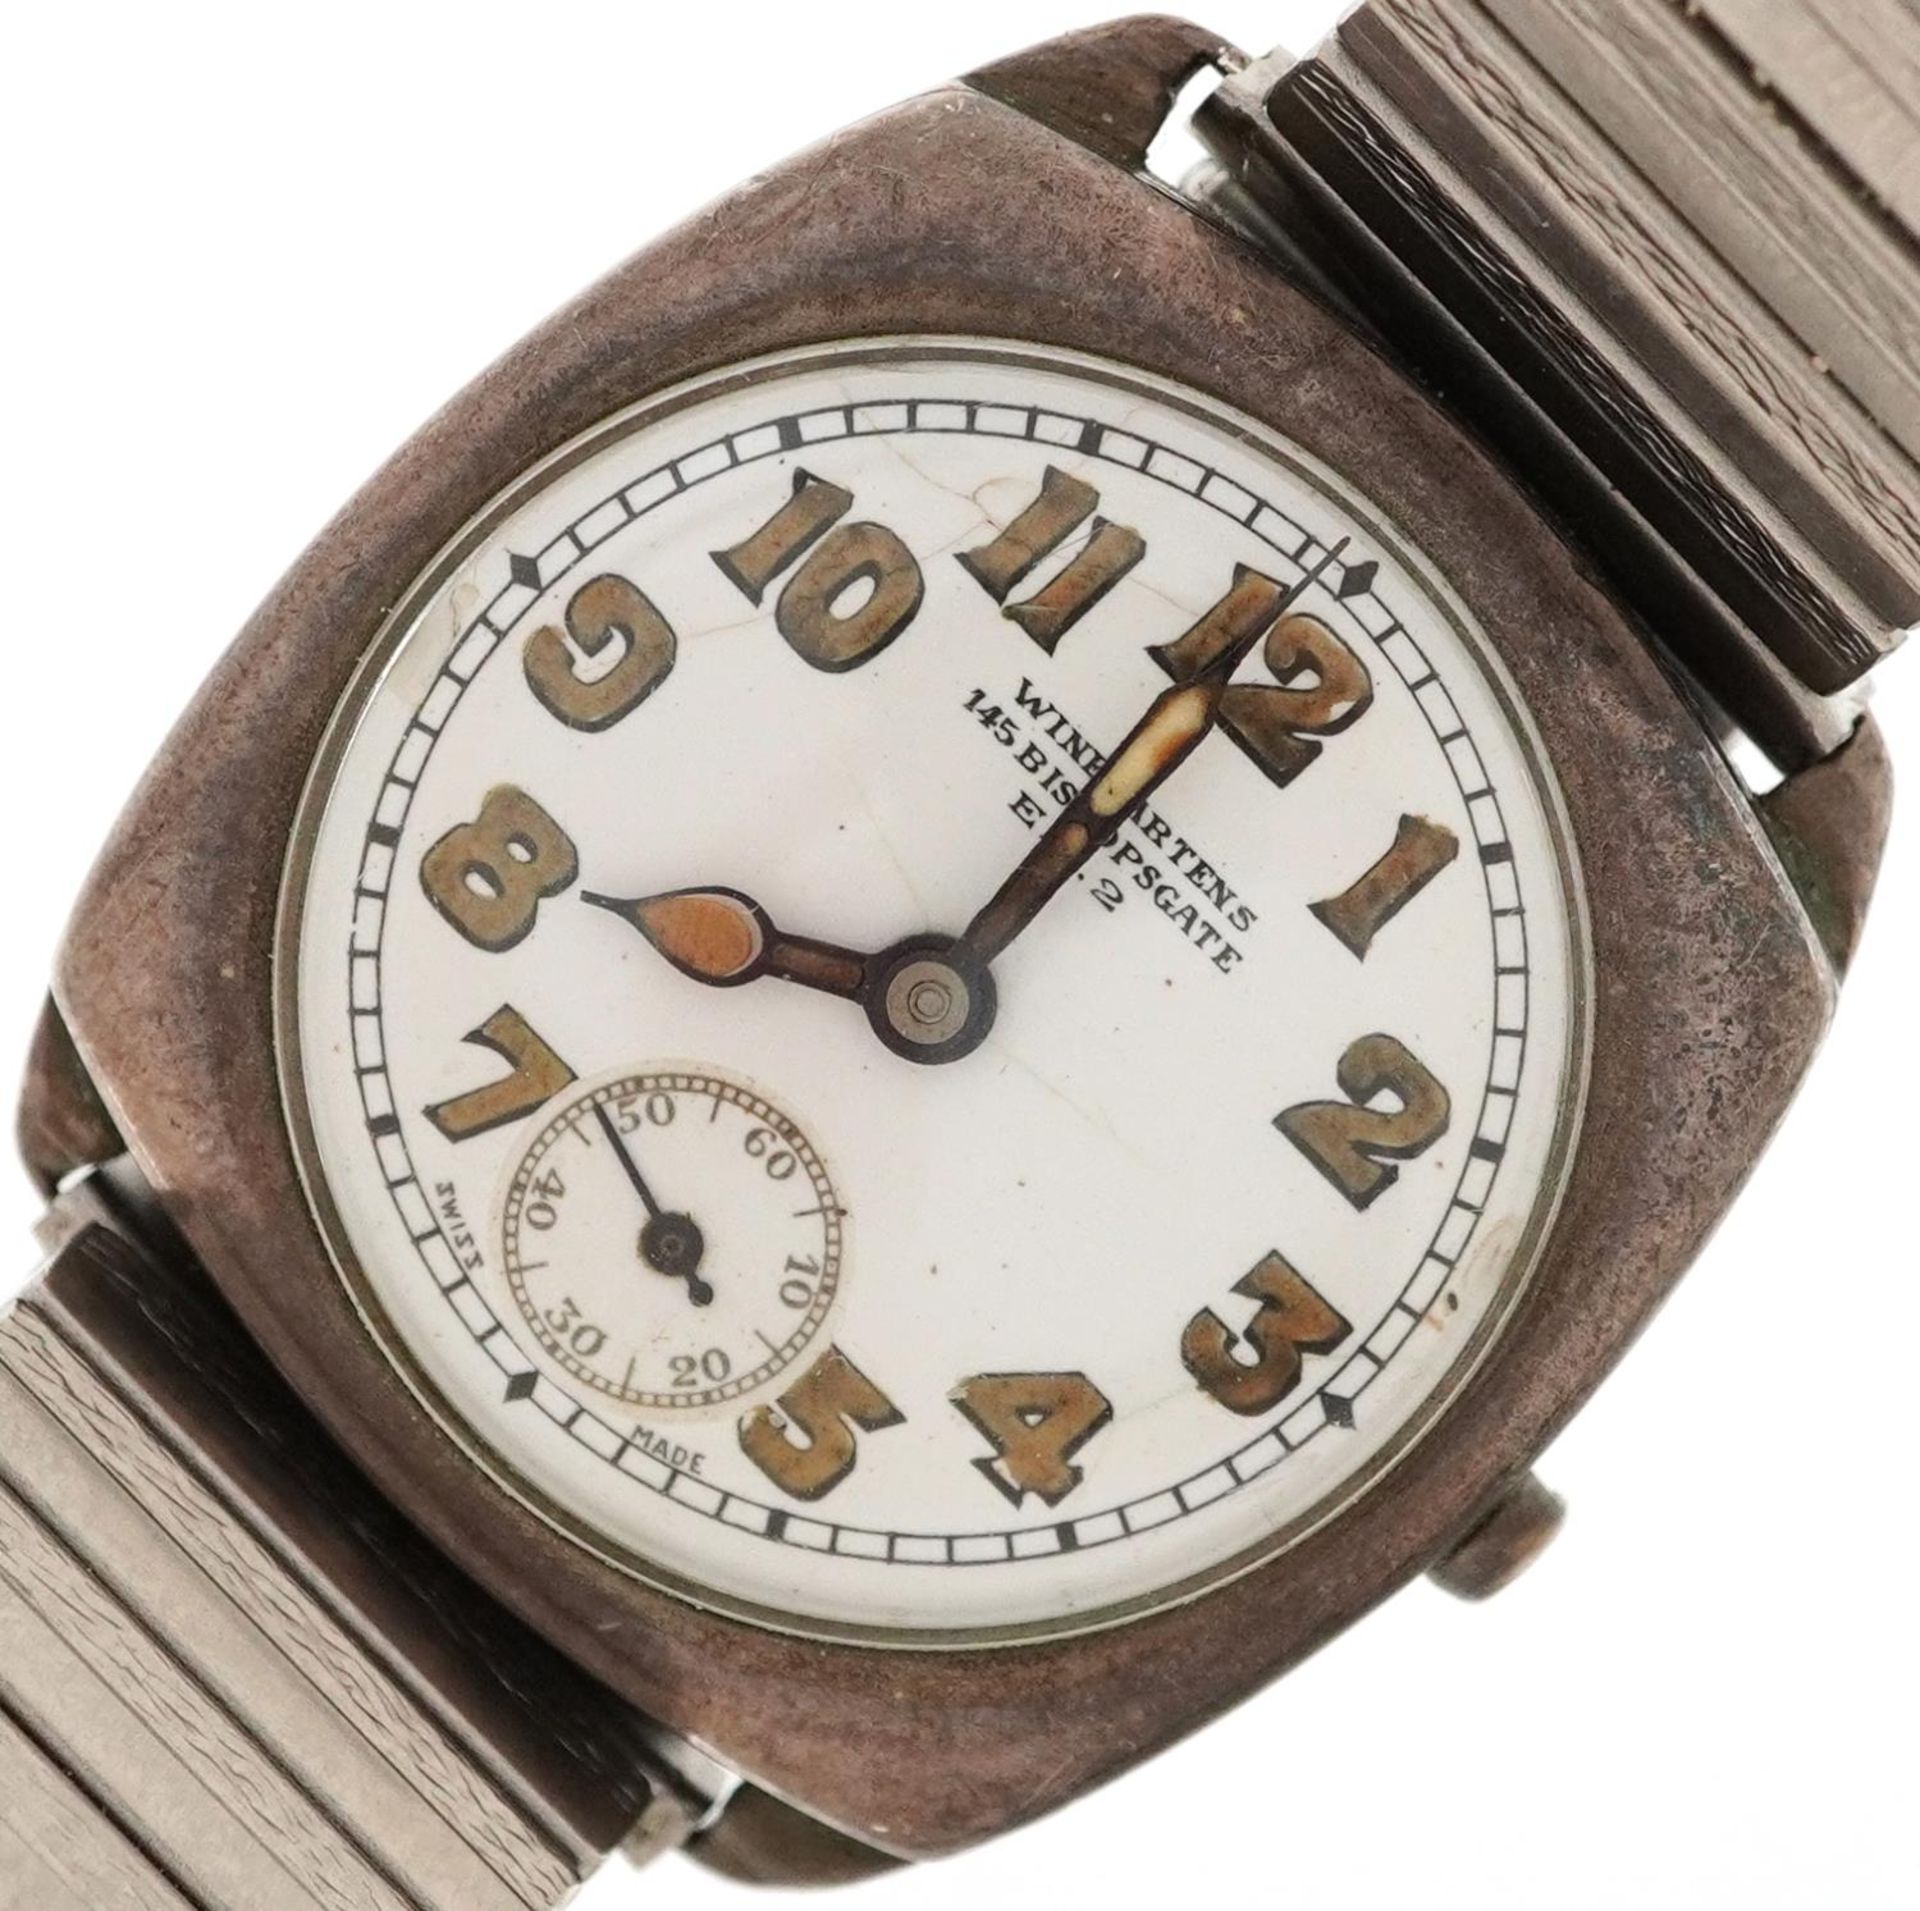 Winegartens, gentlemen's silver manual wind wristwatch having military type enamelled dial and